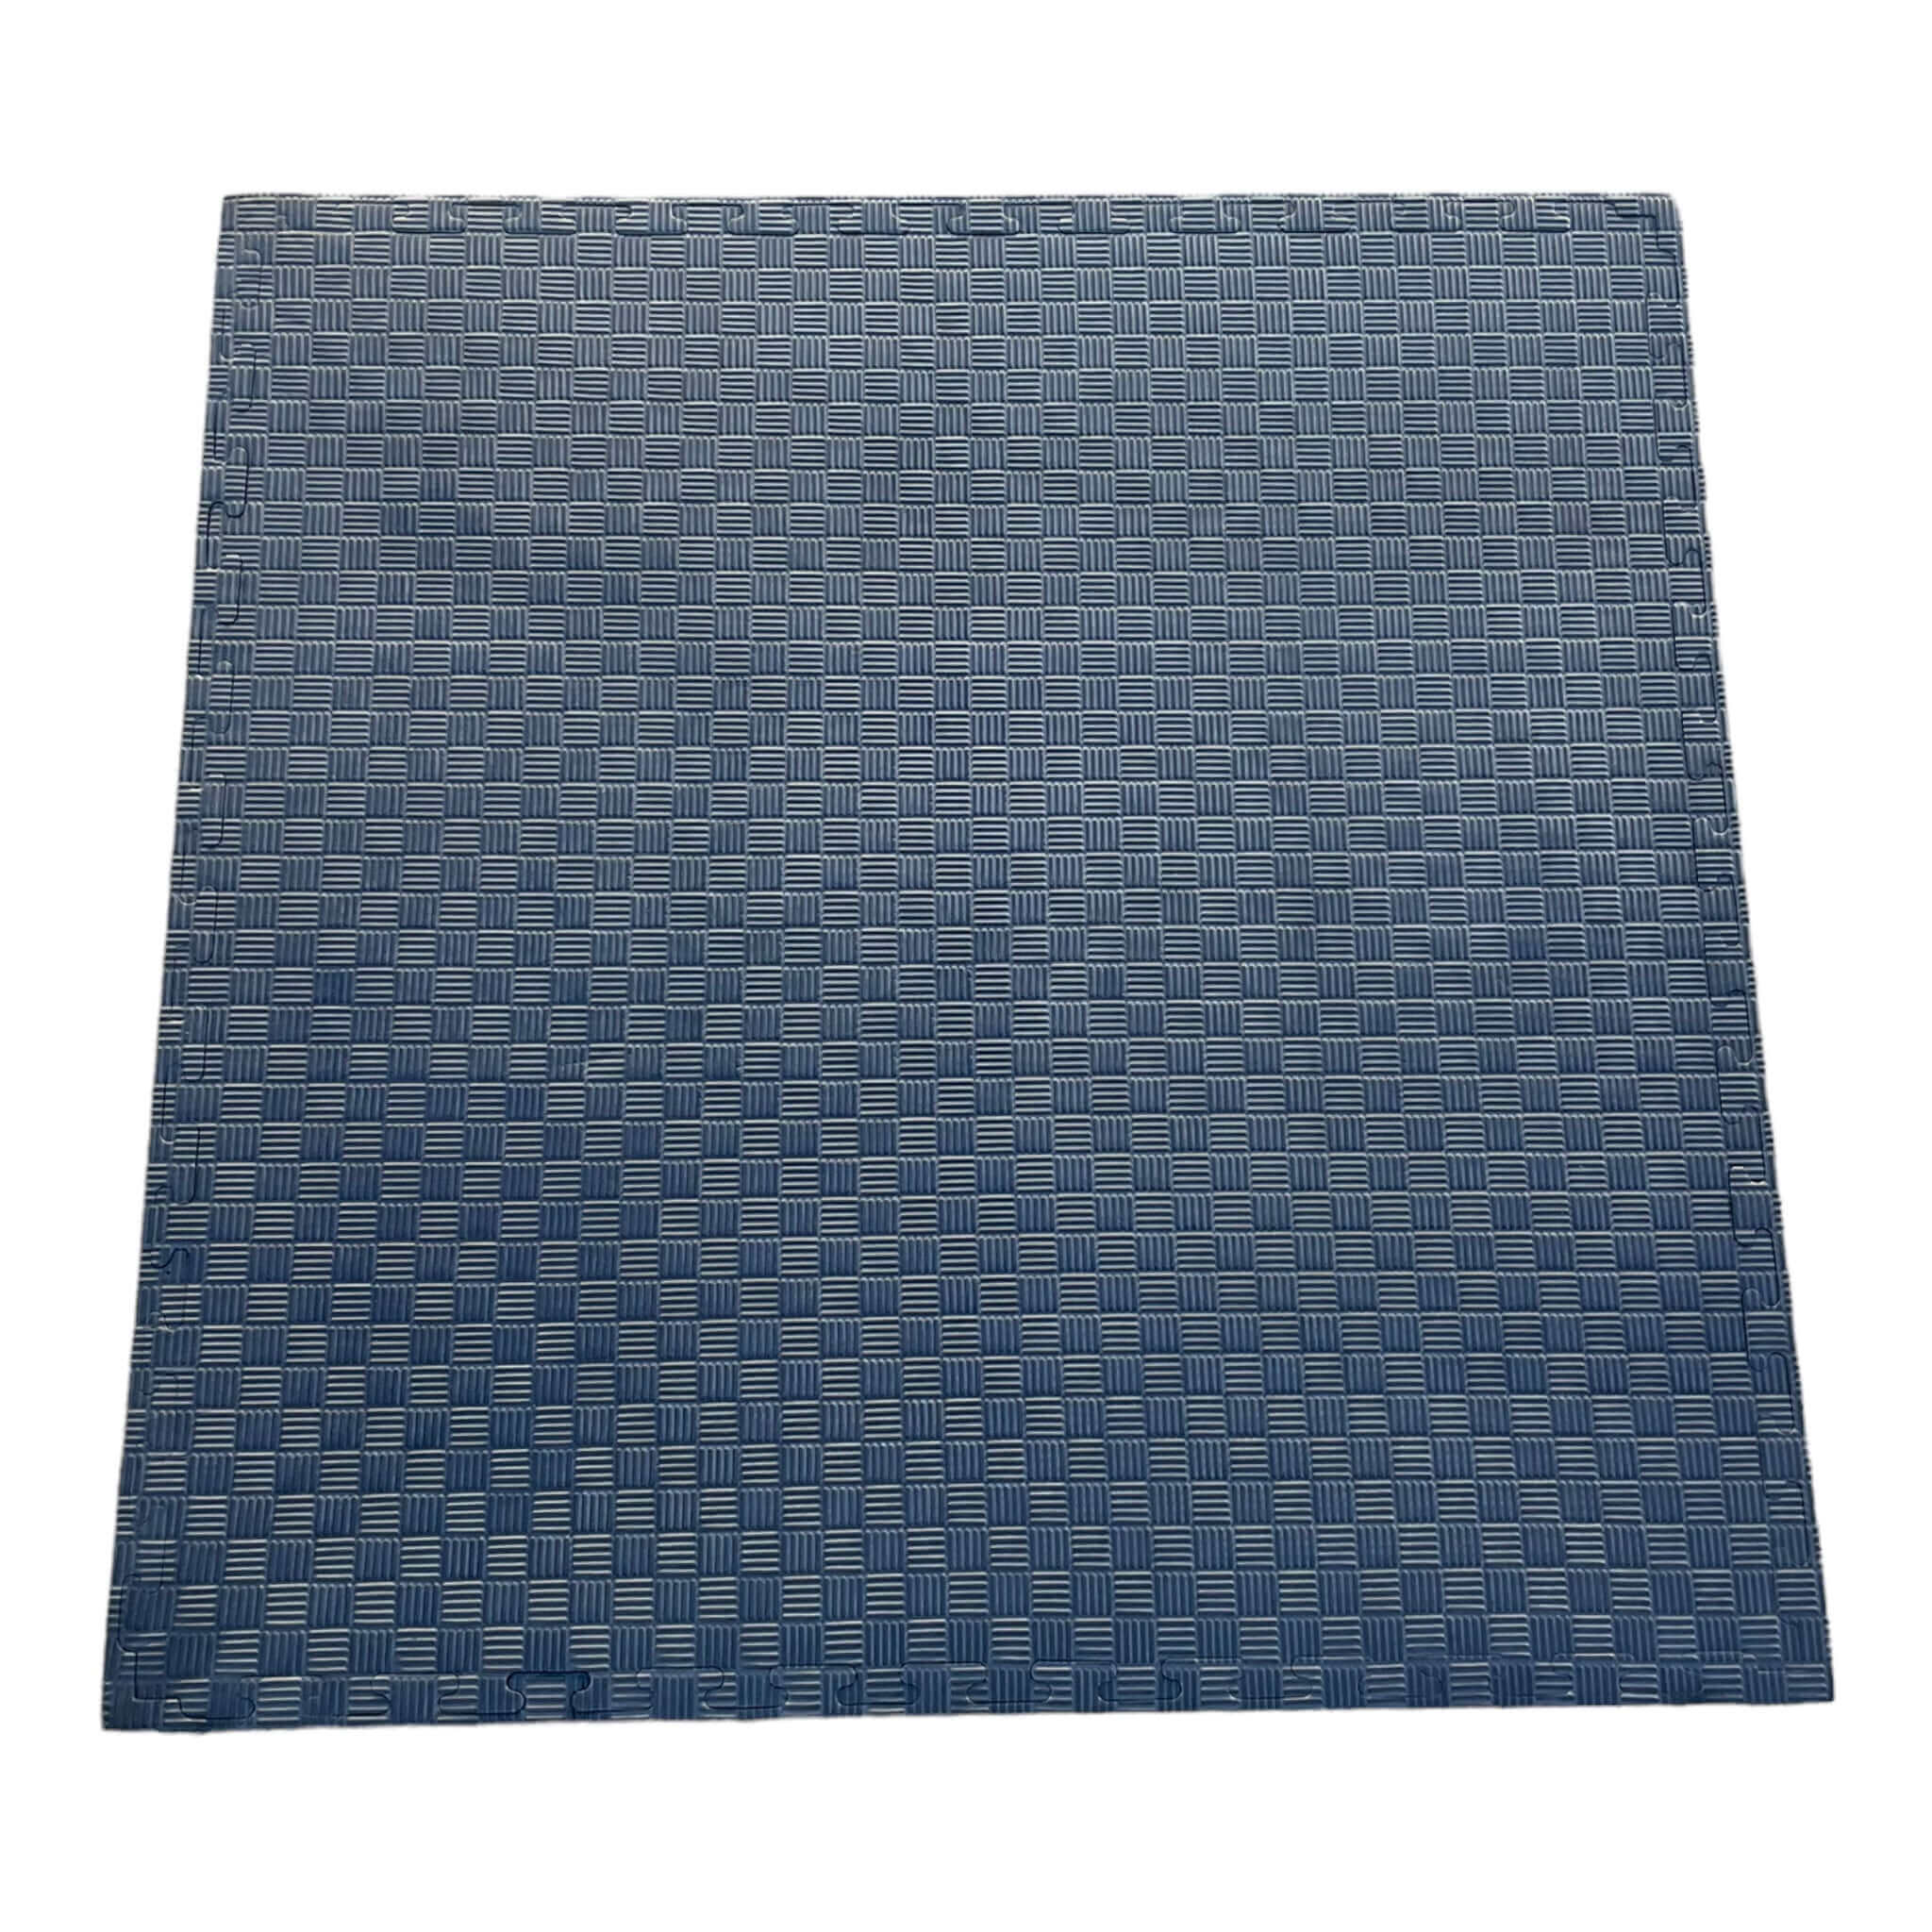 Pack of 5 - 40mm EVA Foam Jigsaw Interlocking Floor Tile Mat 1m x 1m BLACK / GREY | INSOURCE